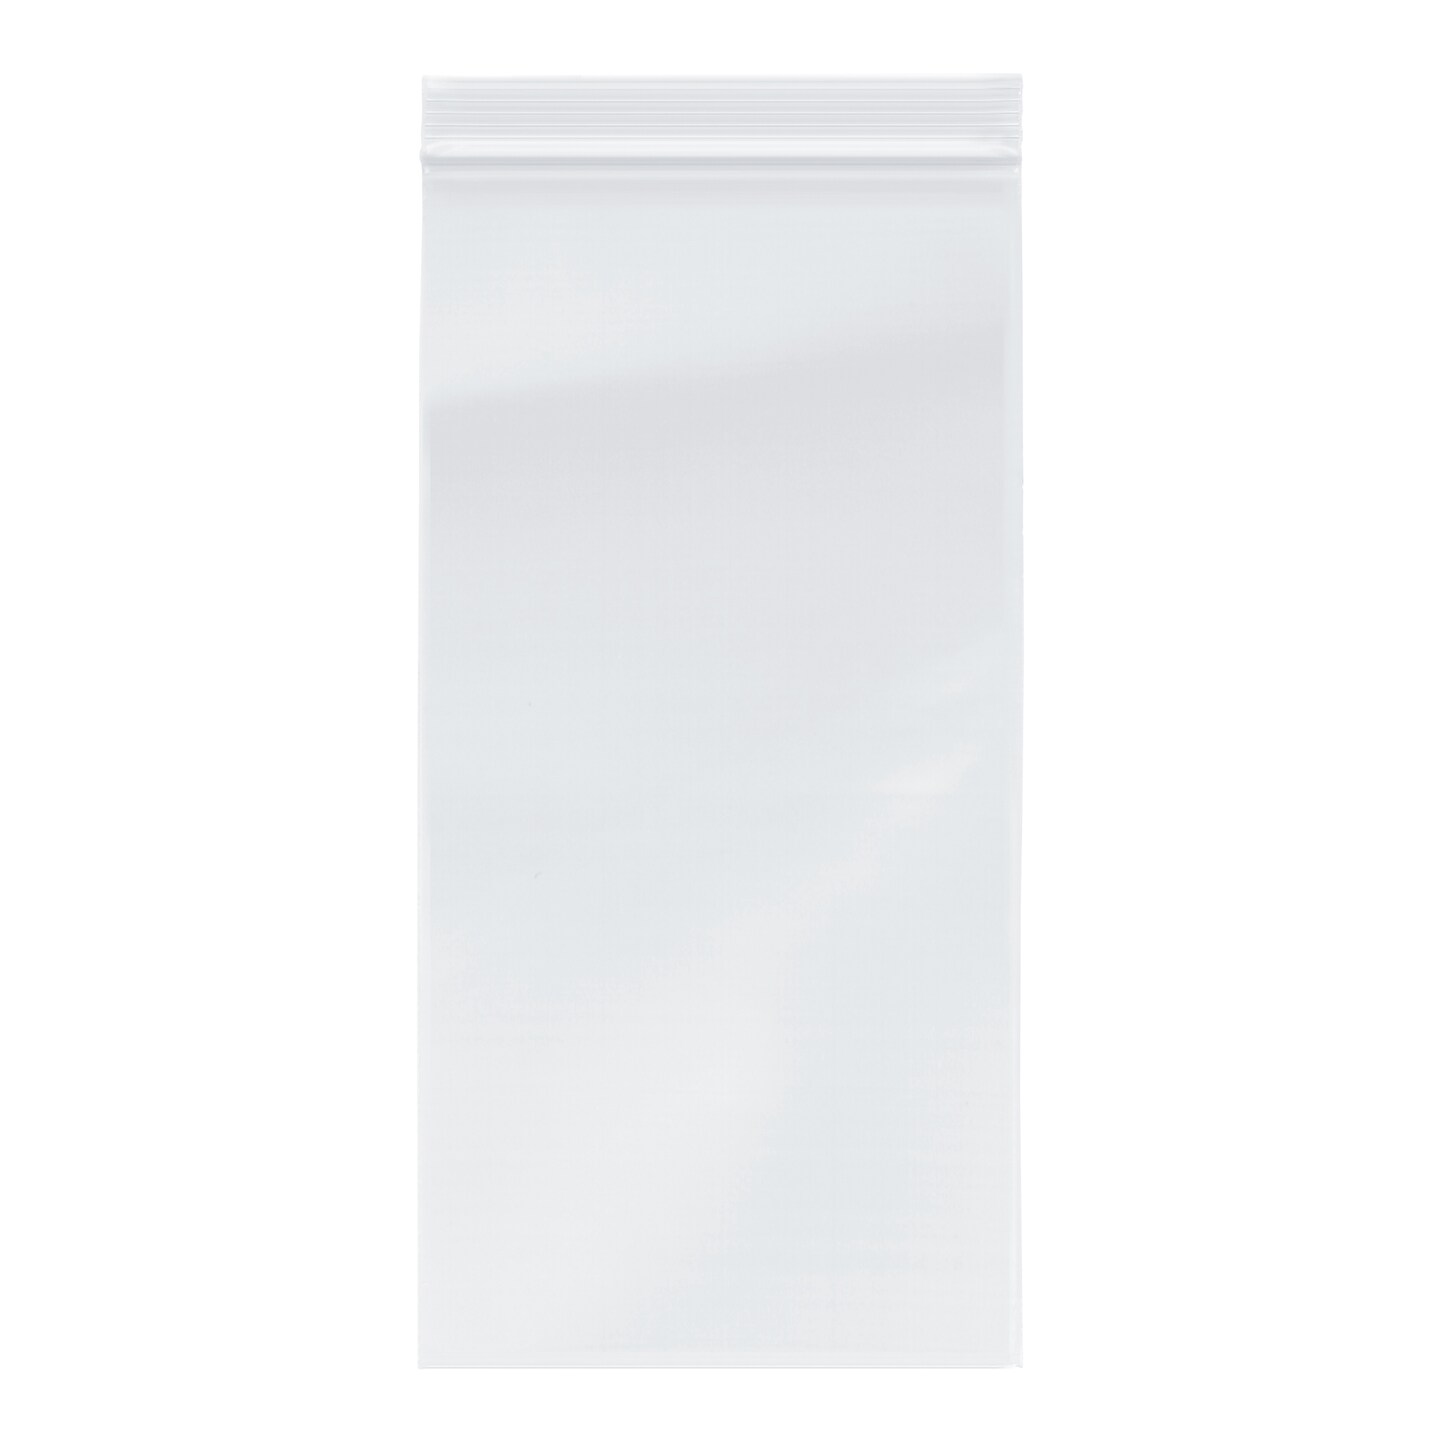 Plymor Heavy Duty Plastic Reclosable Zipper Bags, 4 Mil, 4 x 12 (Pack of  100)